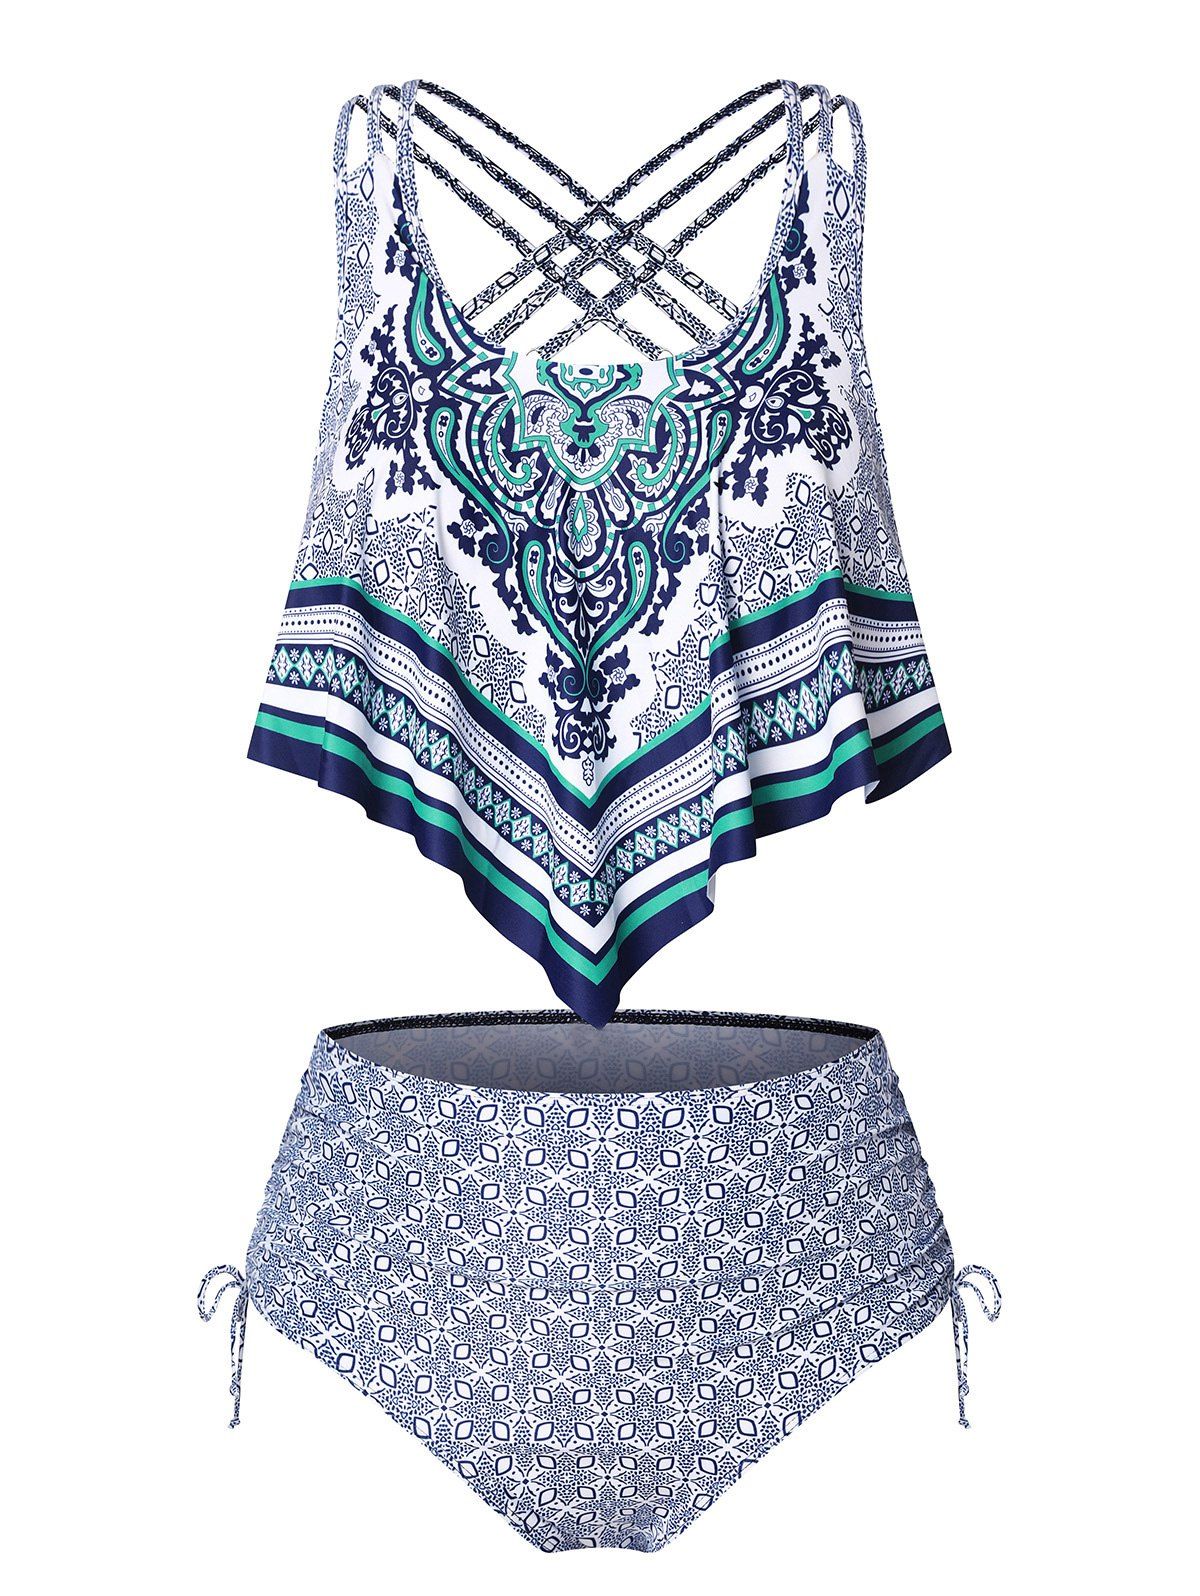 Plus Size Bohemian Cinched Crisscross Tankini Swimsuit - multicolor L